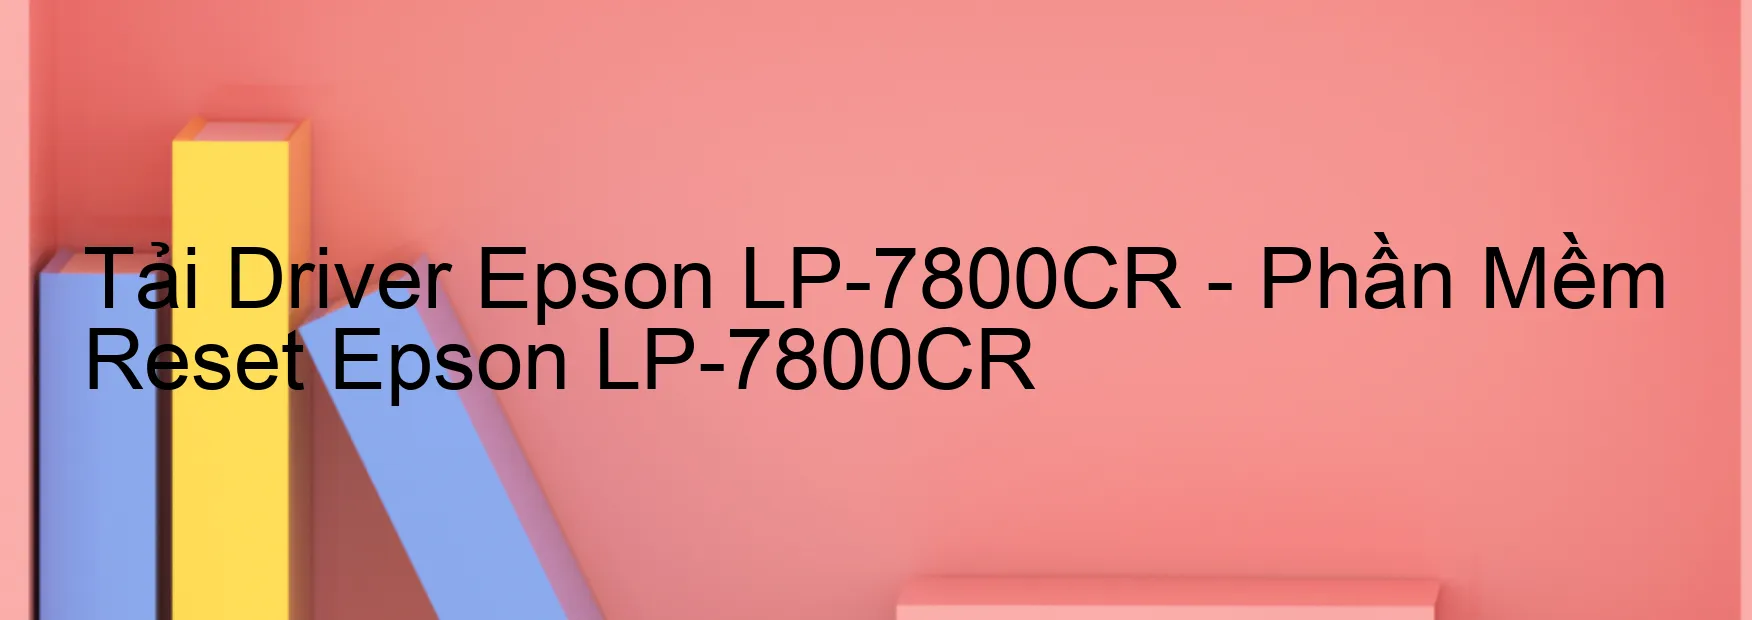 Driver Epson LP-7800CR, Phần Mềm Reset Epson LP-7800CR